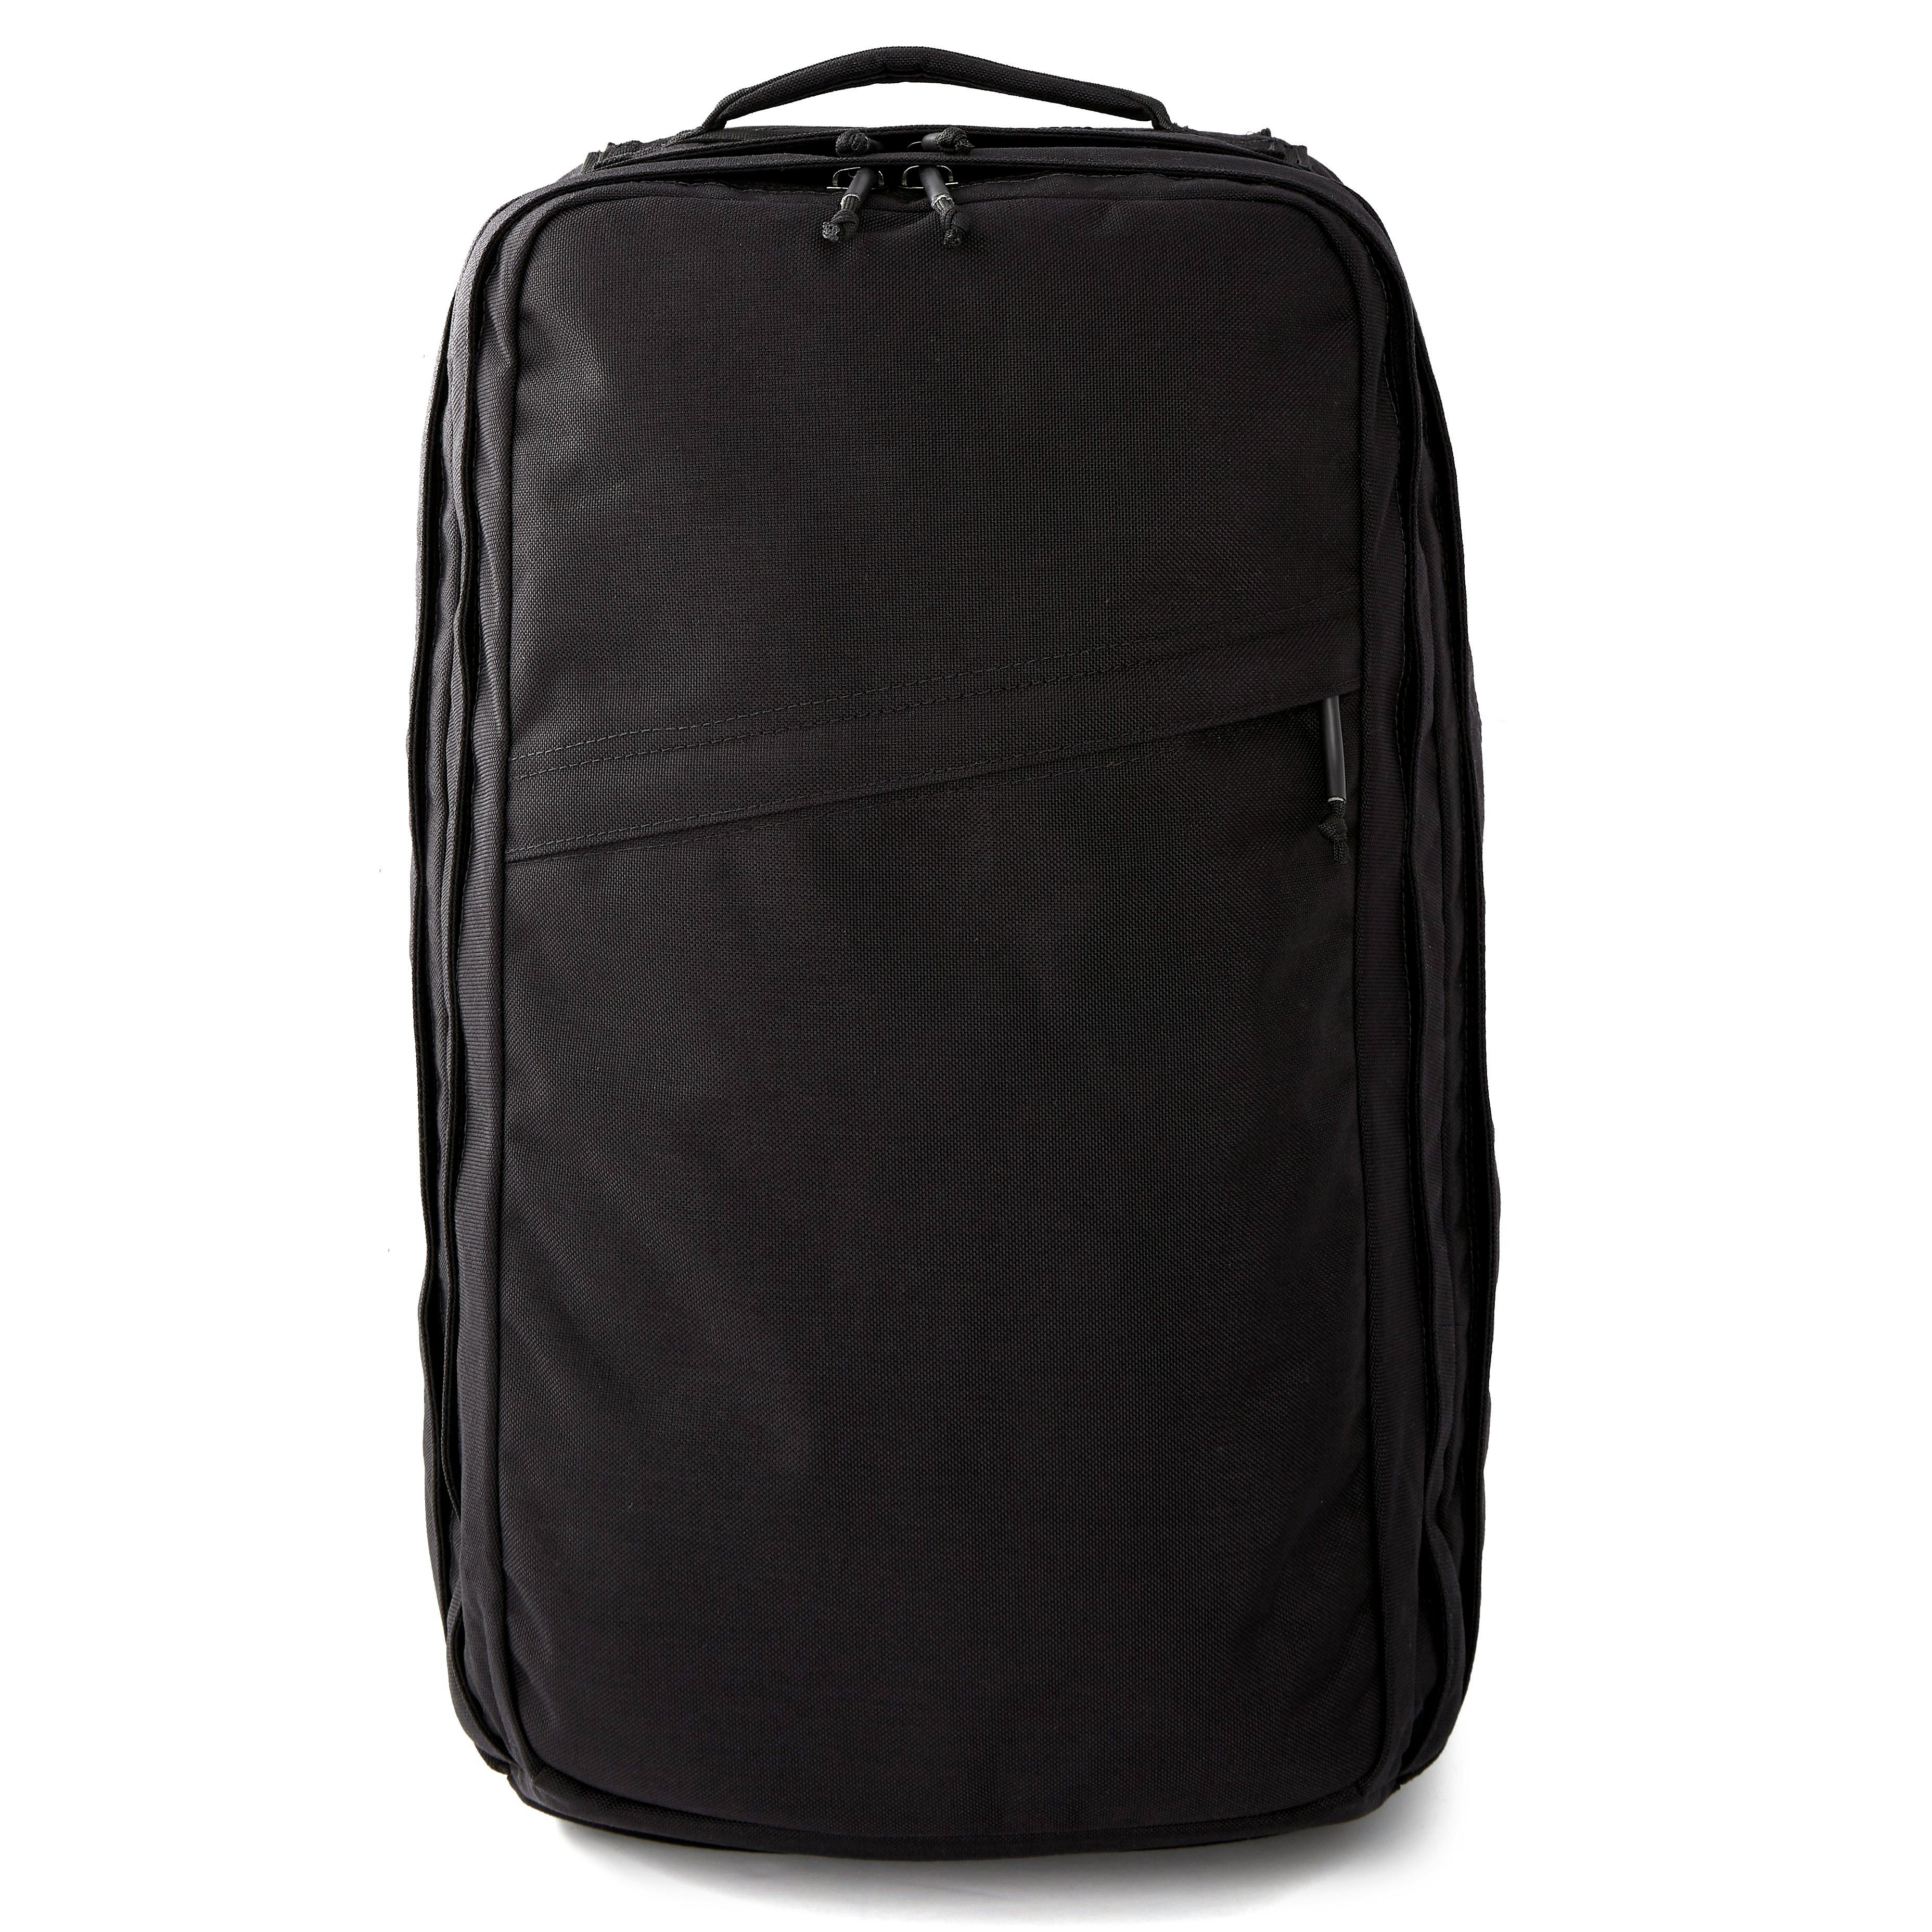 Huckberry X GORUCK GR2 Slick 40L Backpack